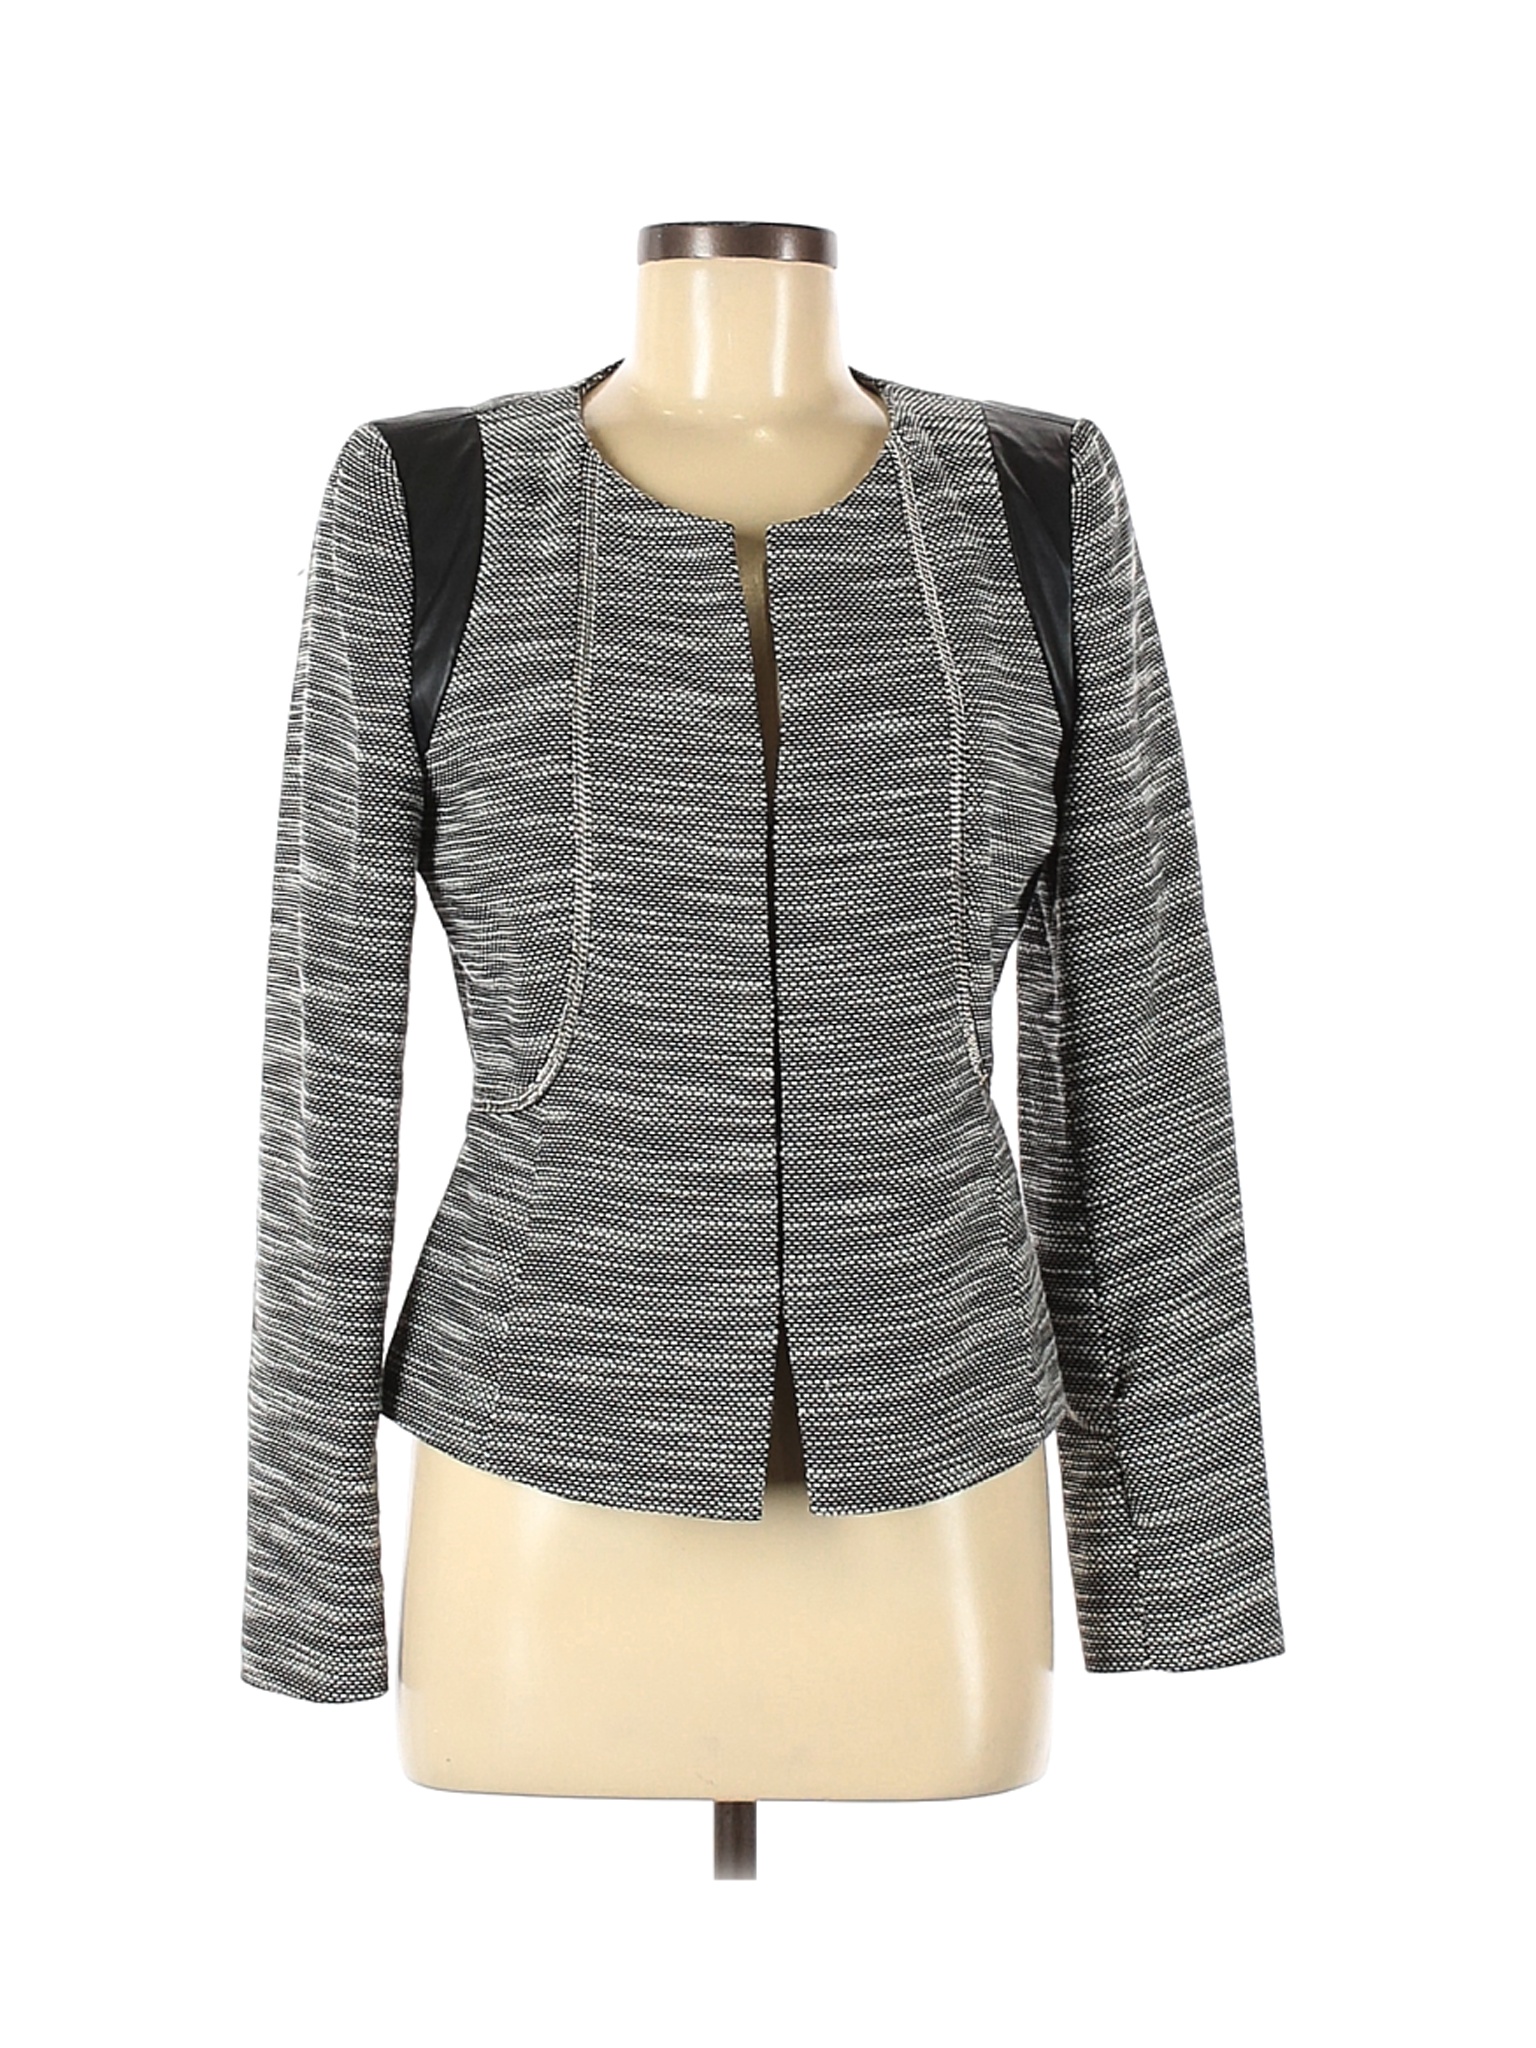 Calvin Klein Women Gray Jacket 8 | eBay